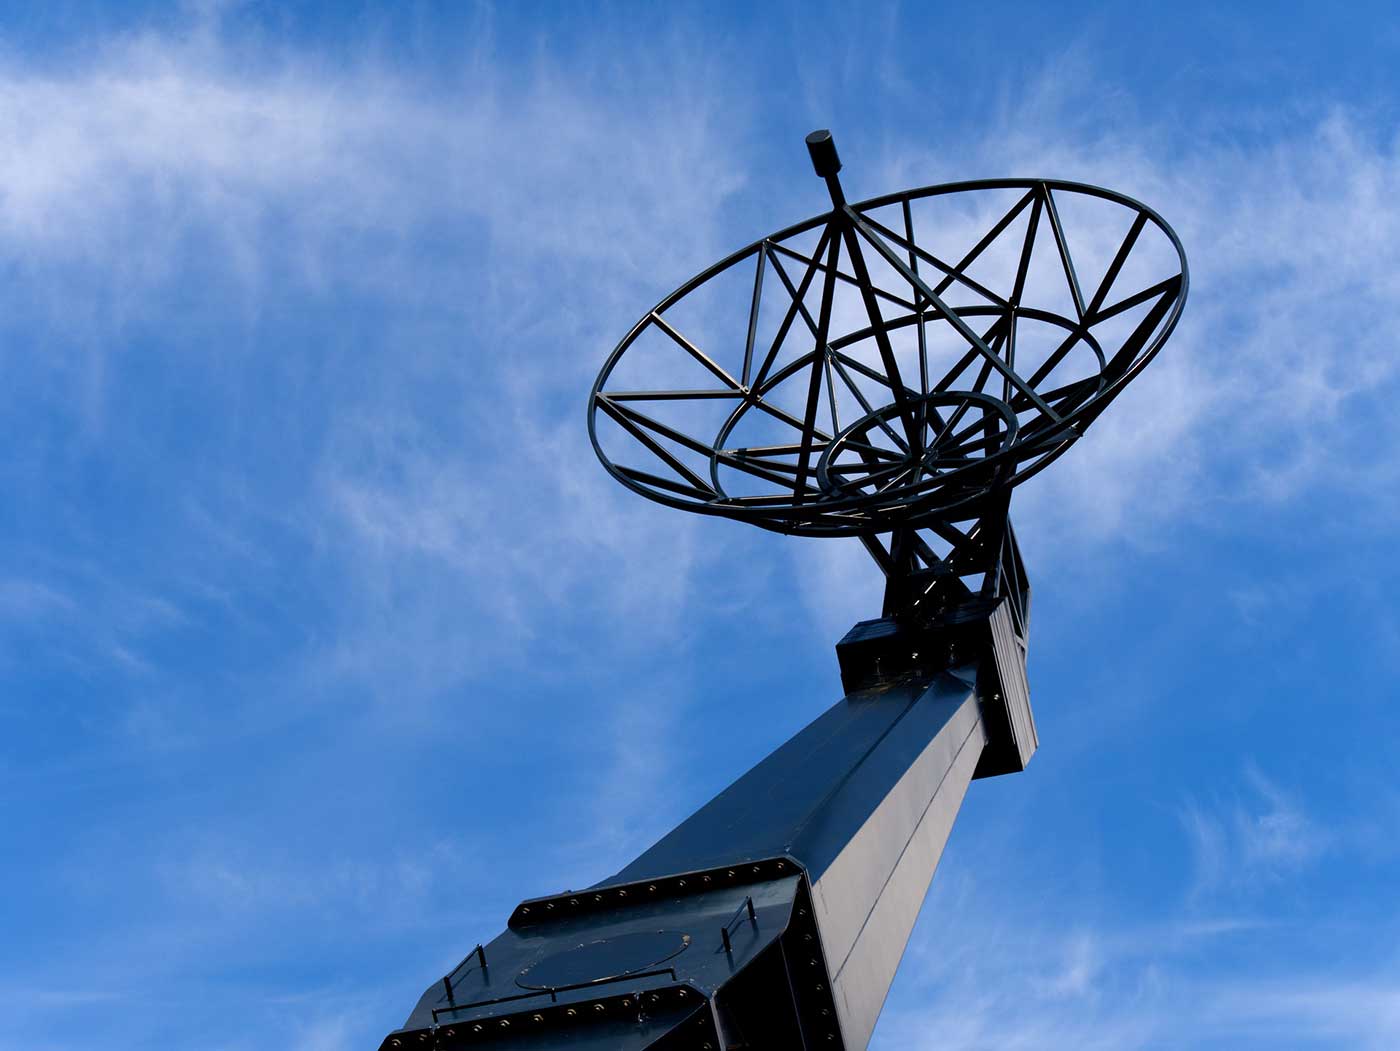 Antenna against a blue sky